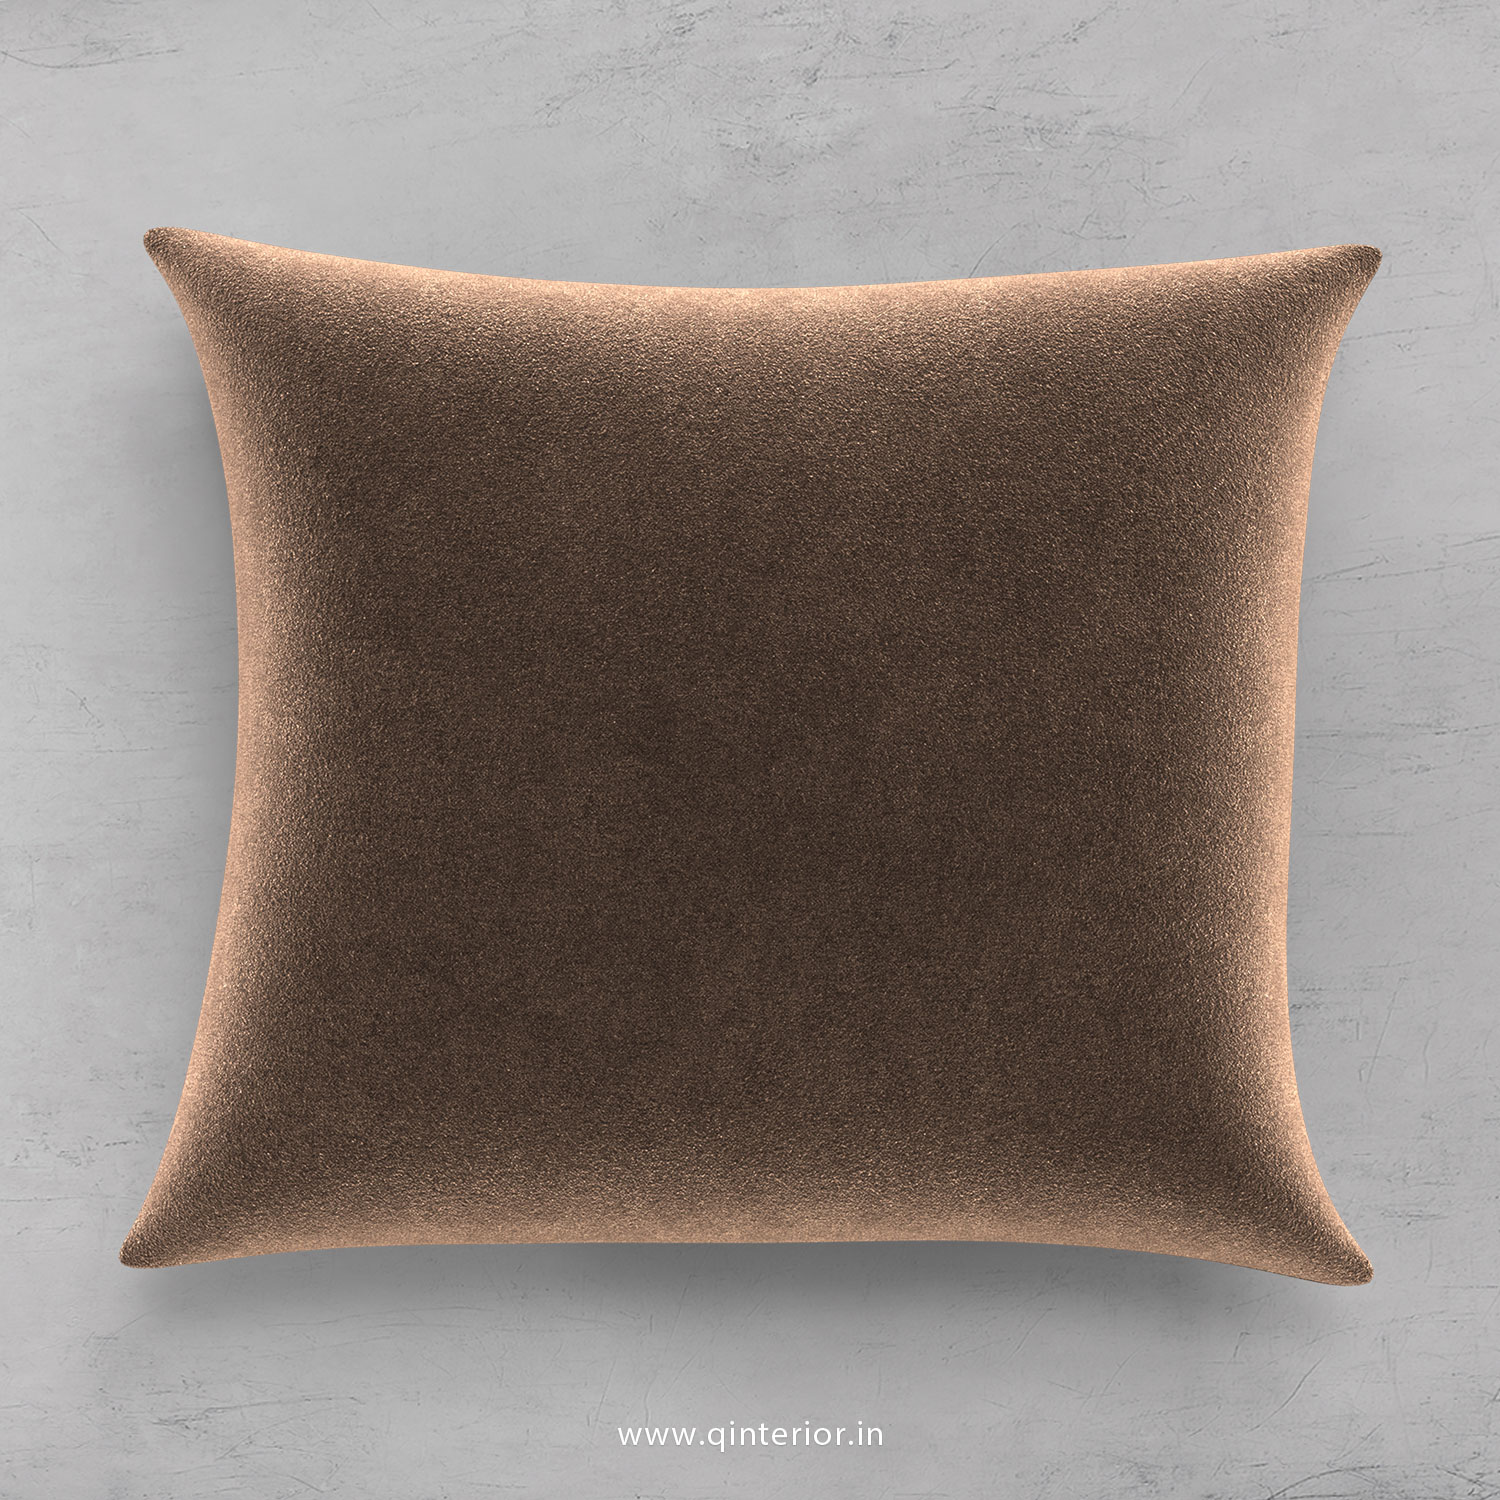 Cushion With Cushion Cover in Velvet Fabric -CUS001 VL02